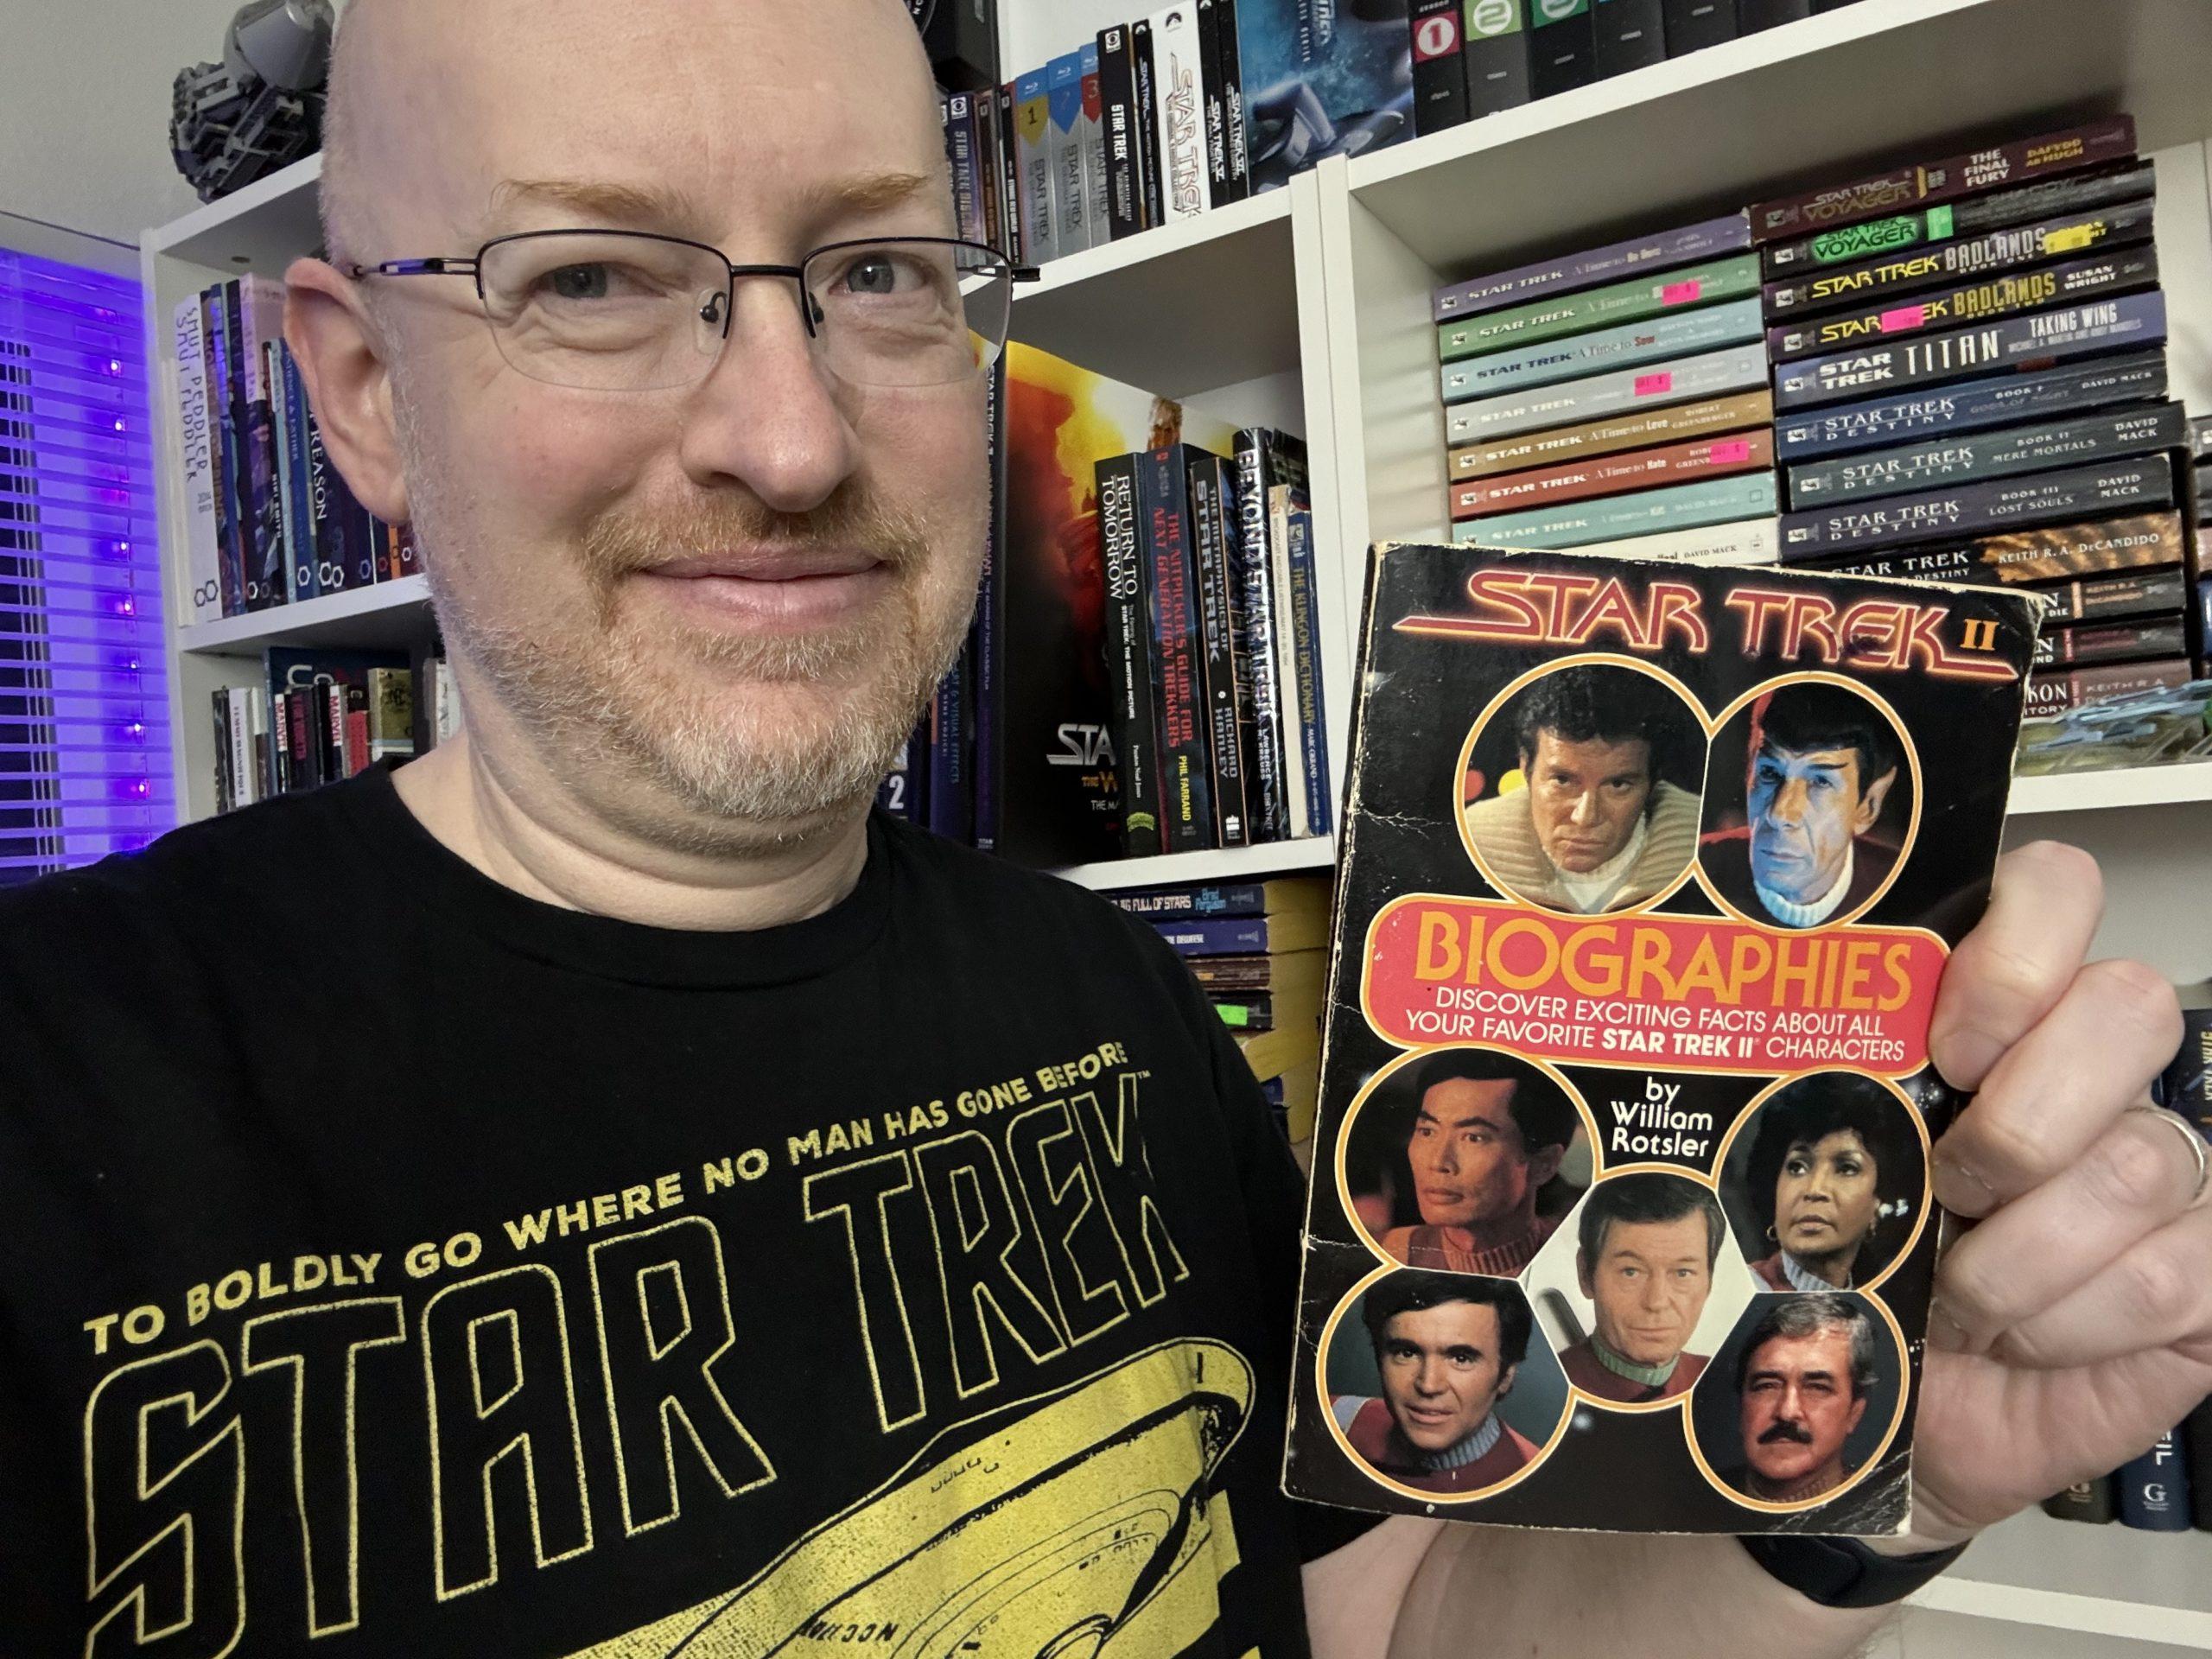 Me holding Star Trek II Biographies